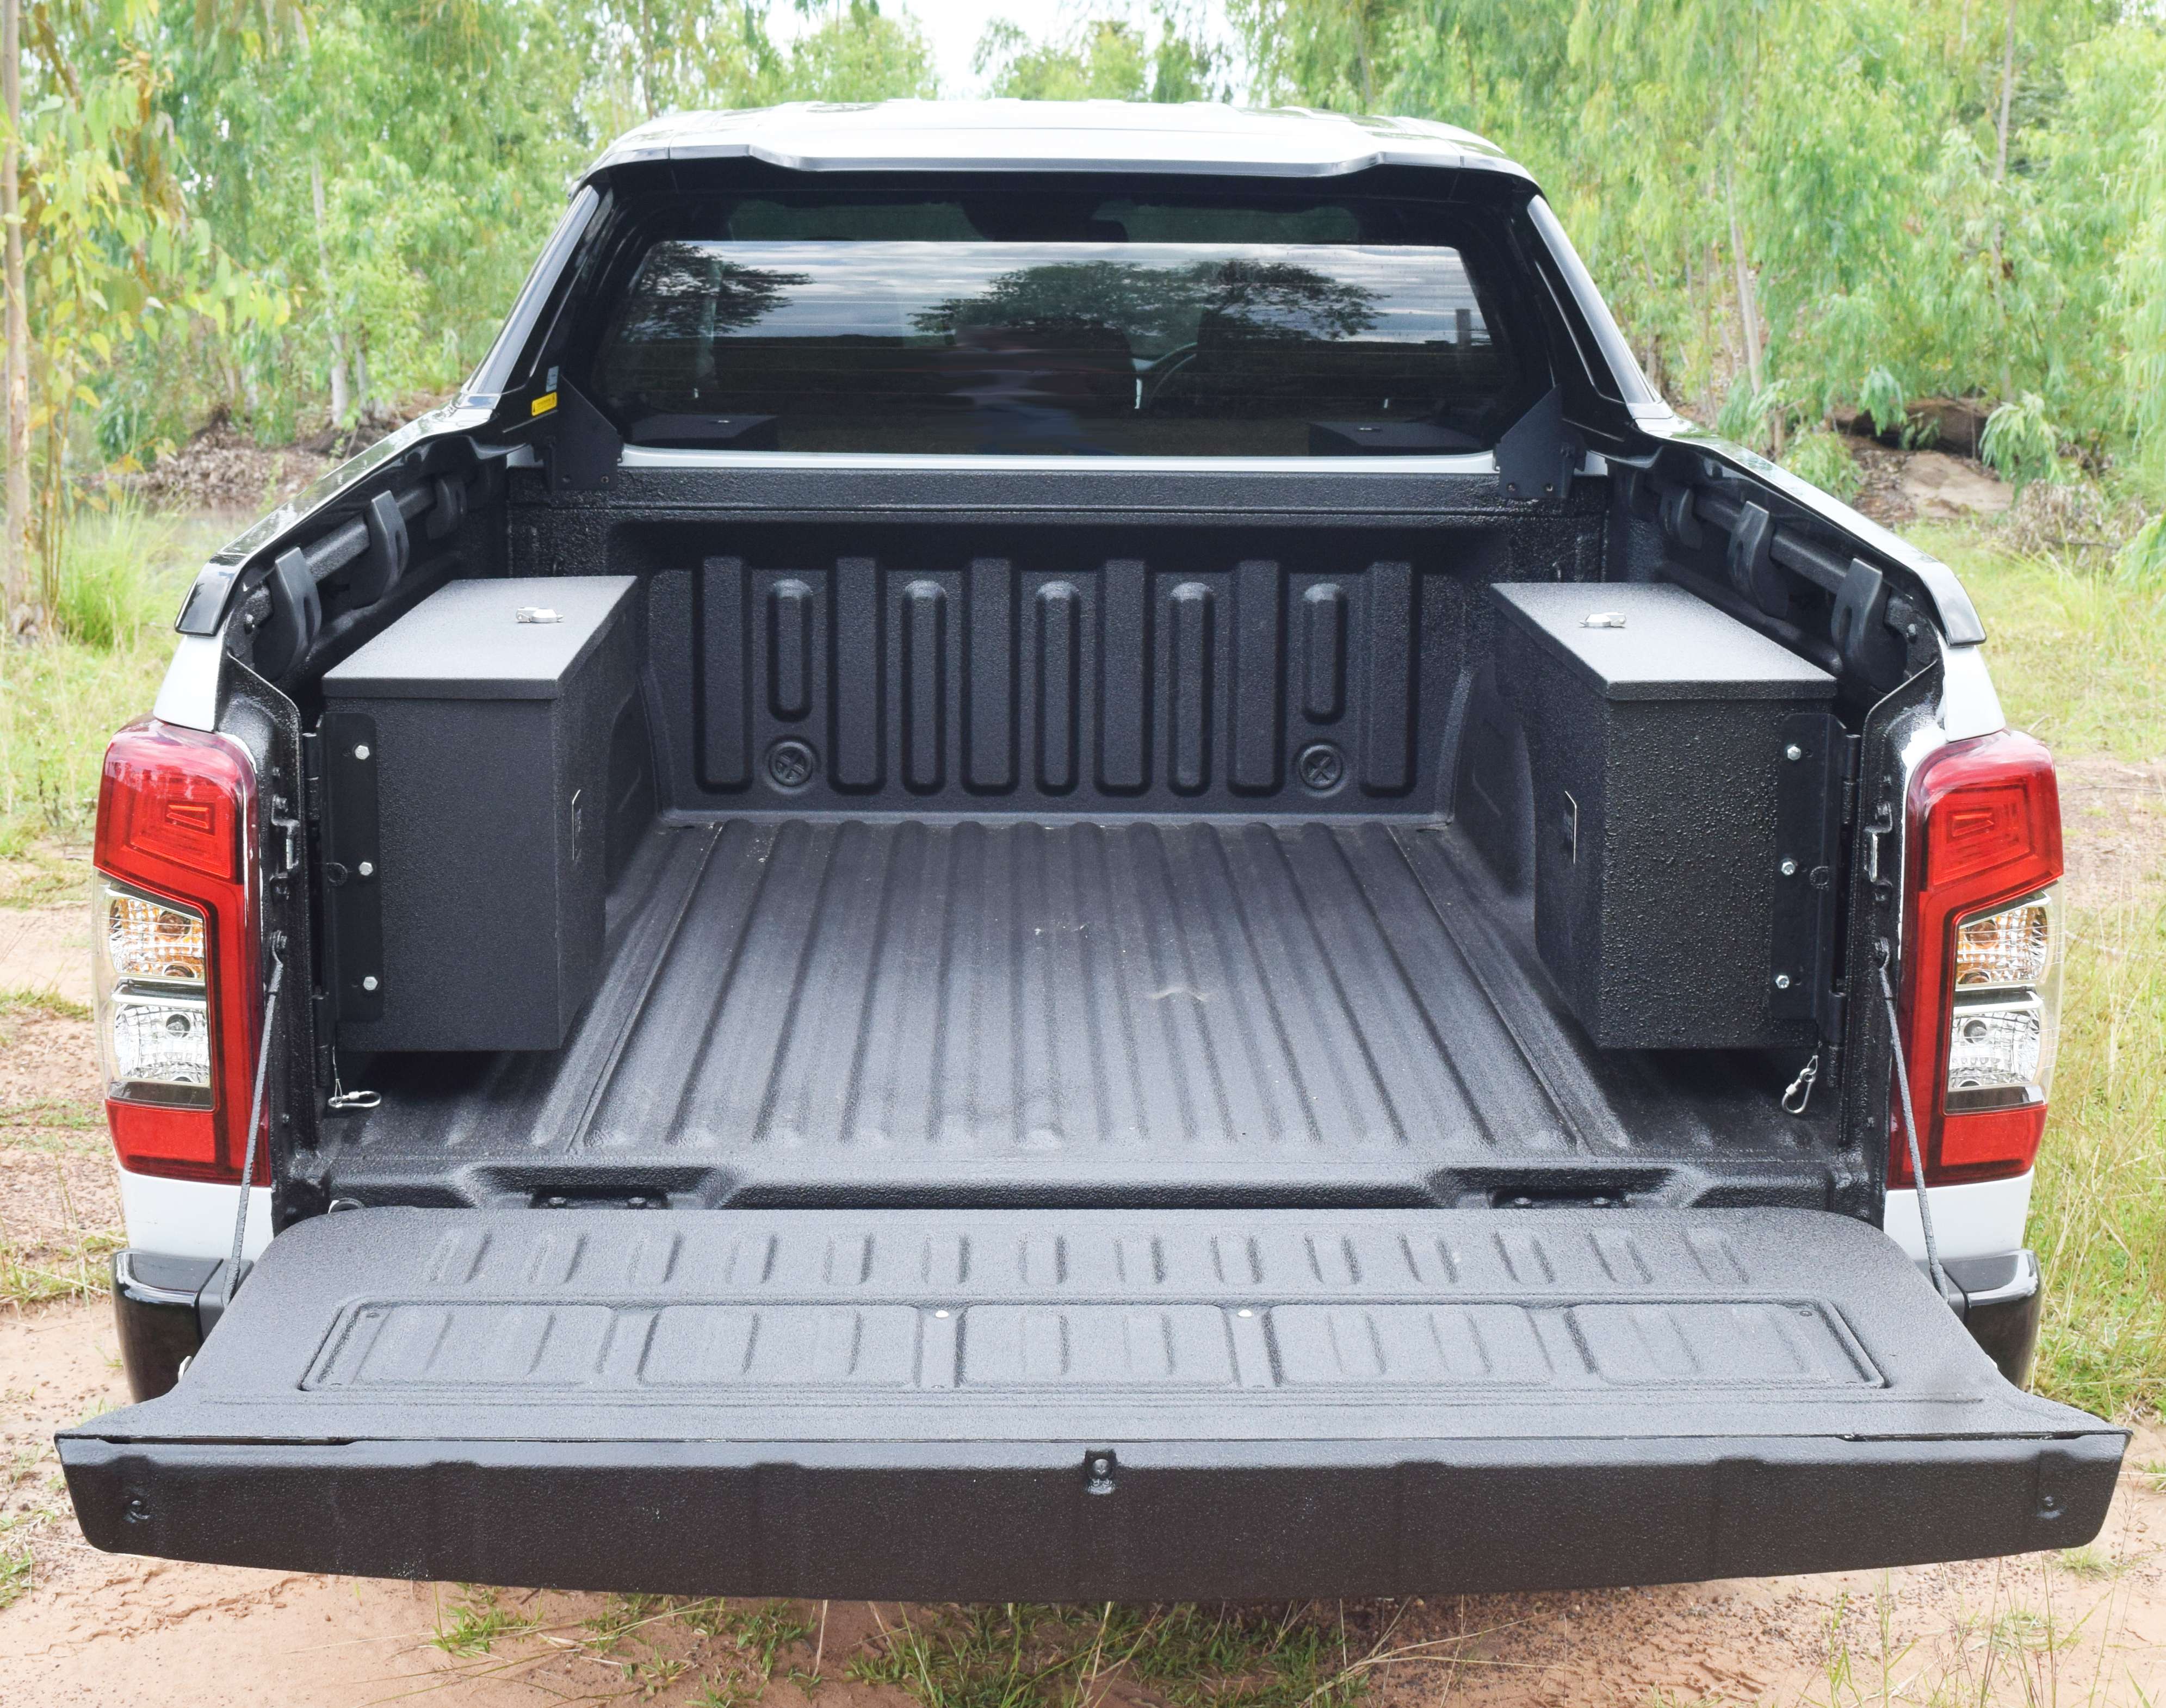 BLACKBOX schwenkbare Alu Staubox für Mitsubishi L200 / Fiat Fullback Pickups -2